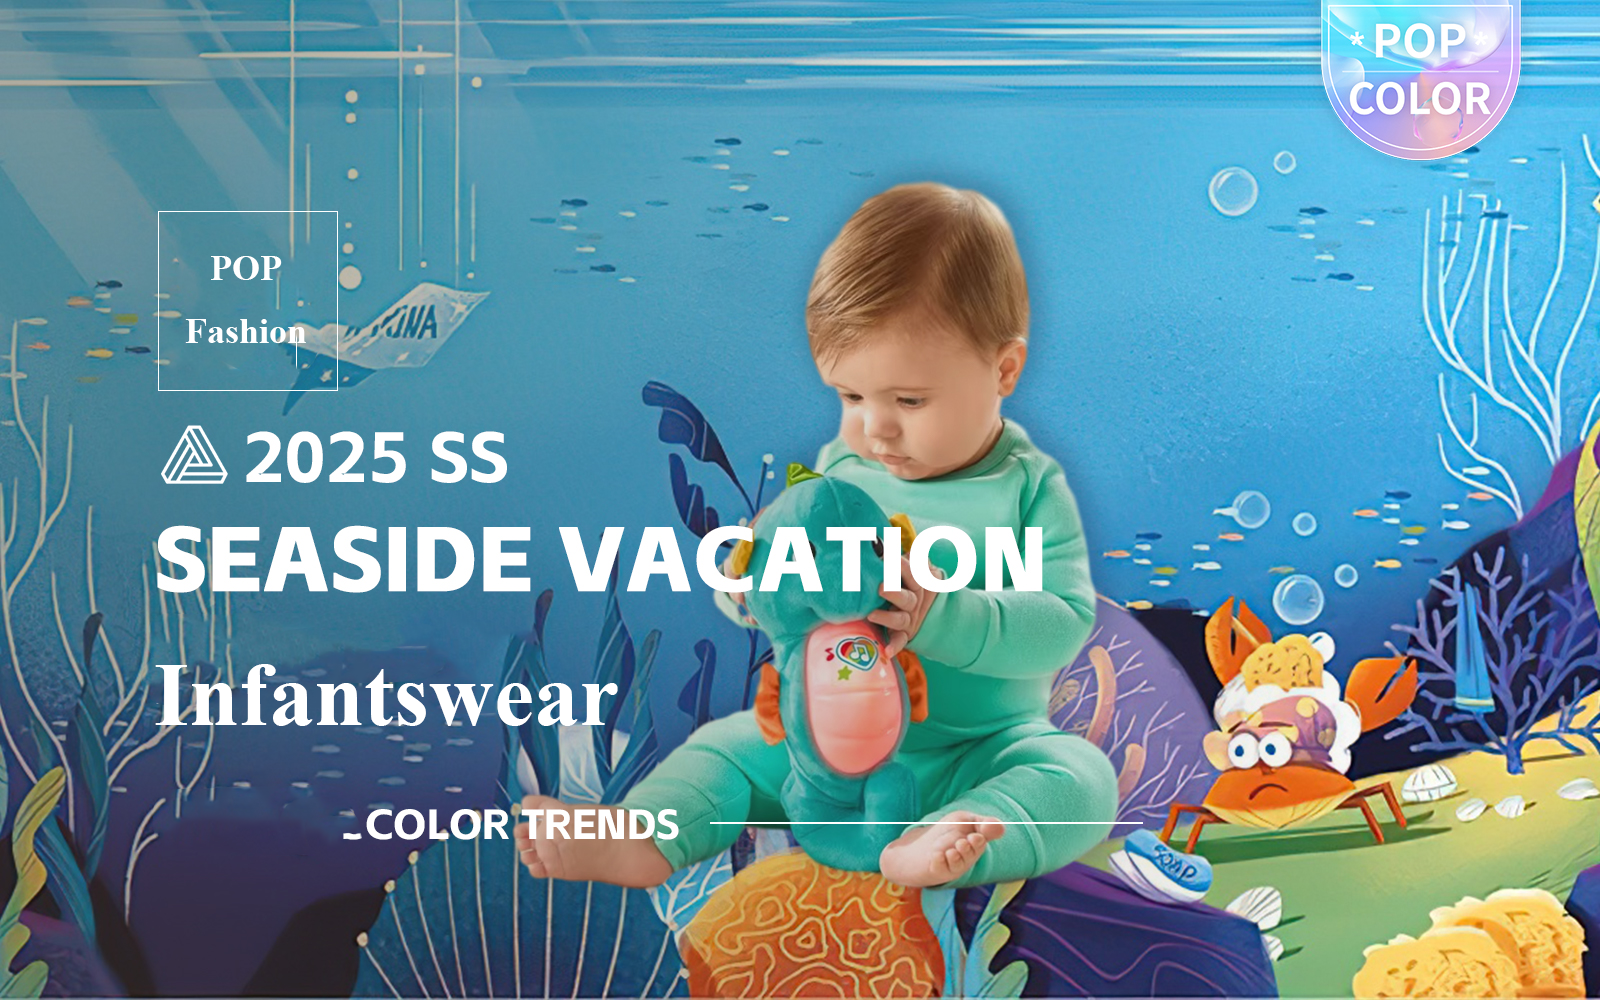 Seaside Vacation -- S/S 2025 Color Trend of Infantswear